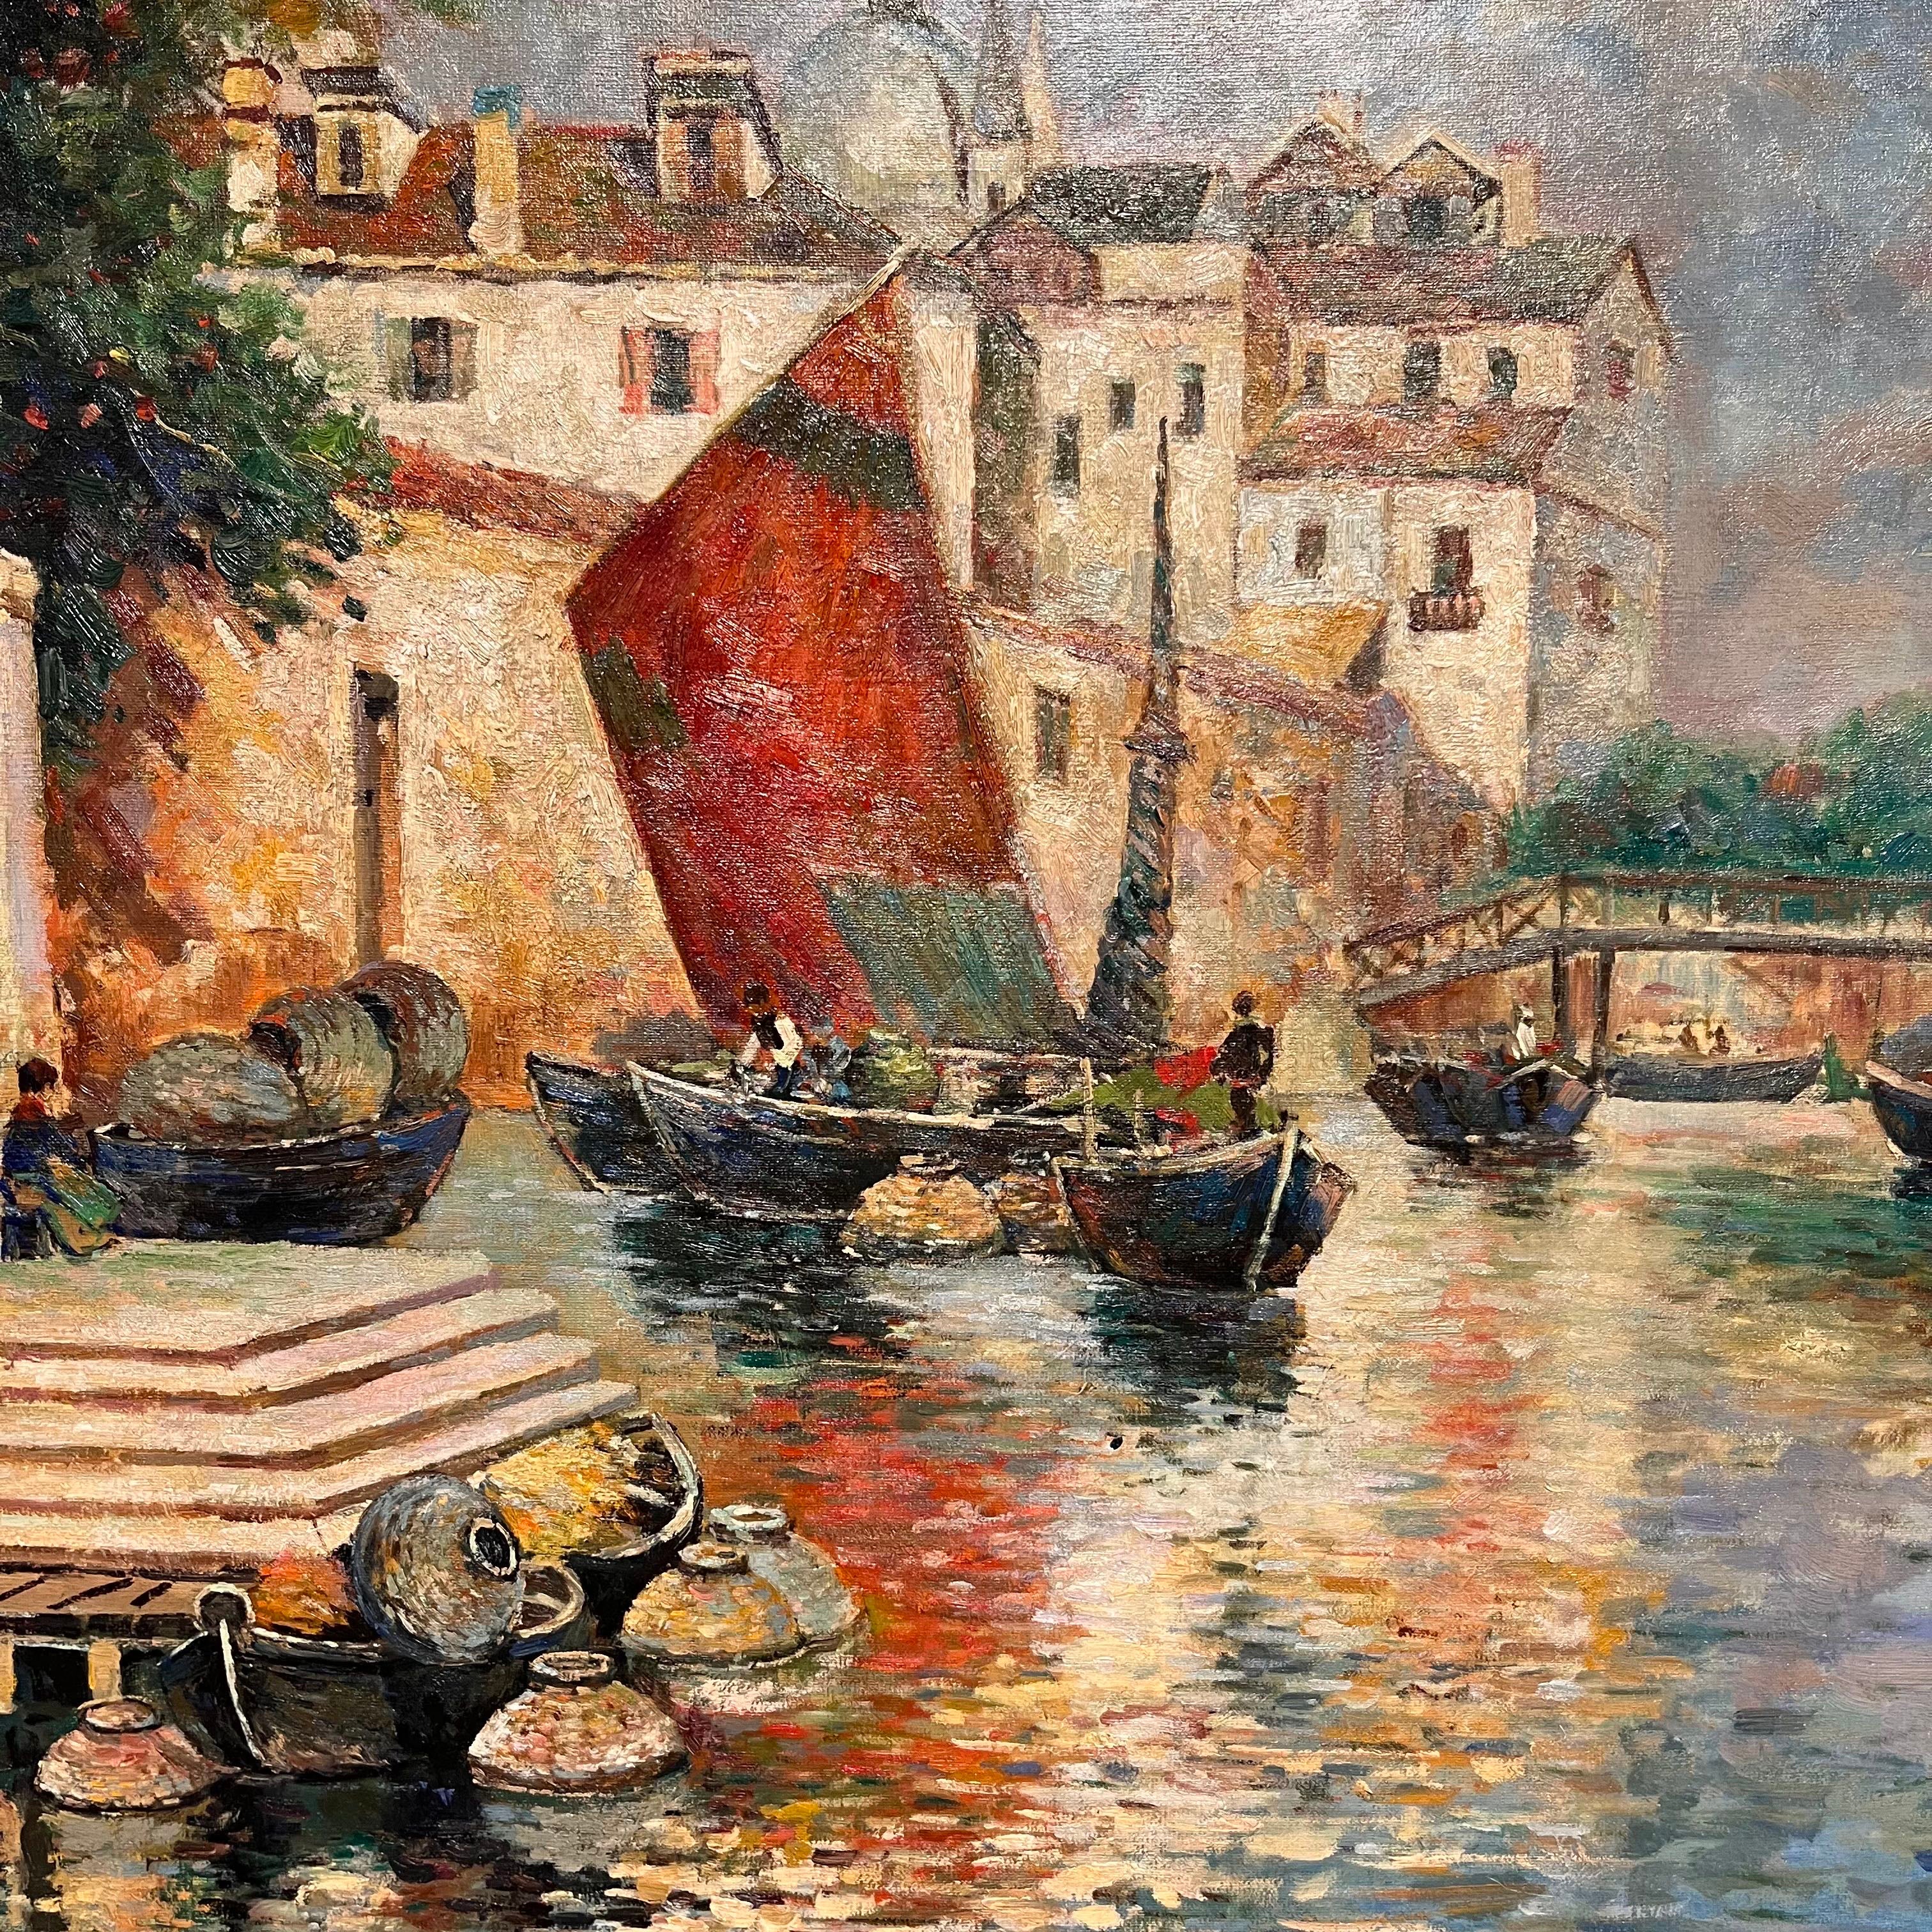 L. Roan Original Venetian Impressionist Oil Painting on Canvas Wall Art